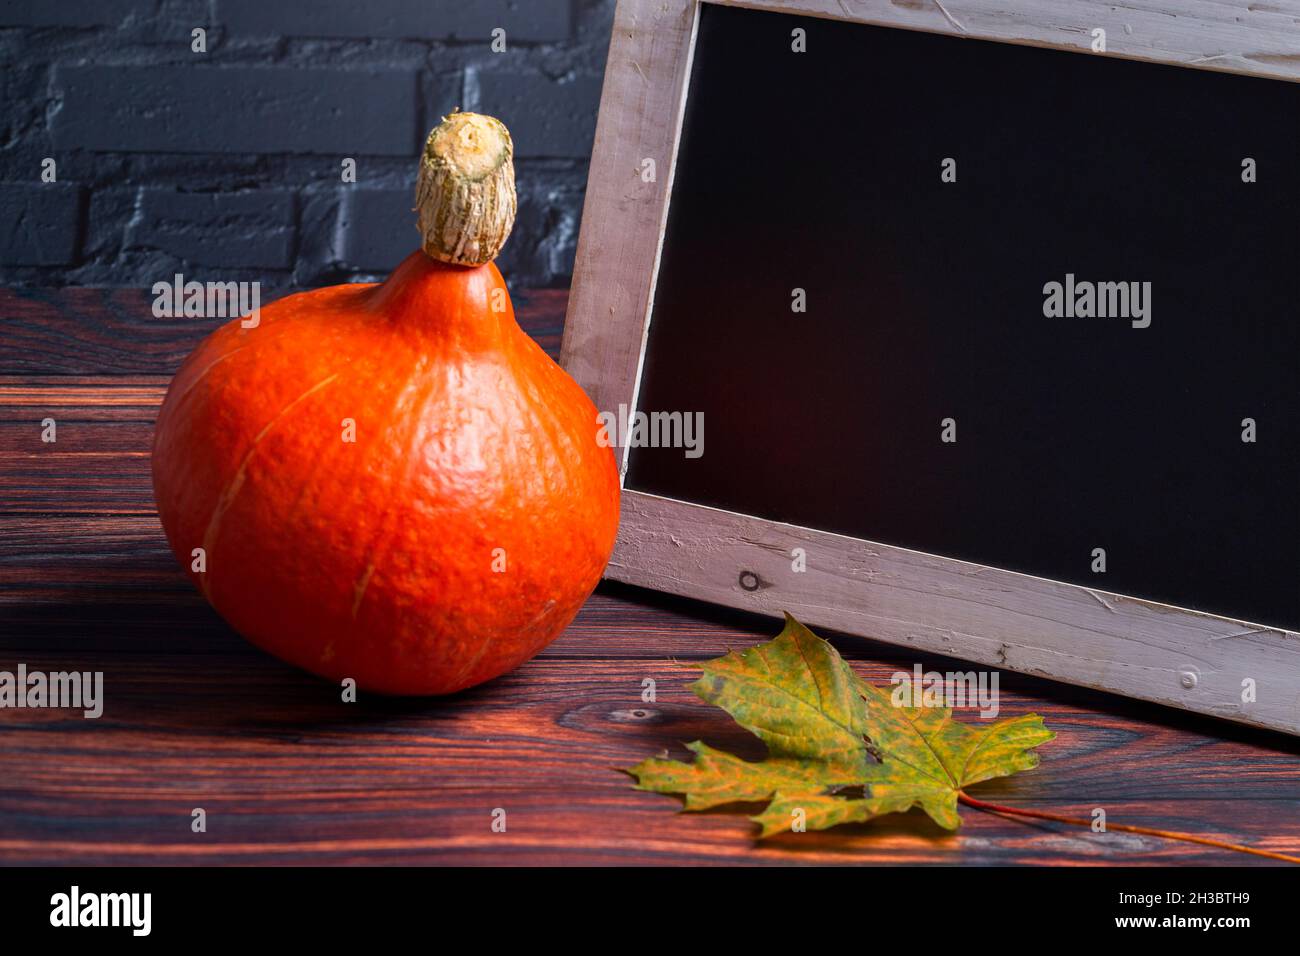 The photo shows an orange Hokkaido pumpkin with a leaf and a chalkboard with black wall Stock Photo